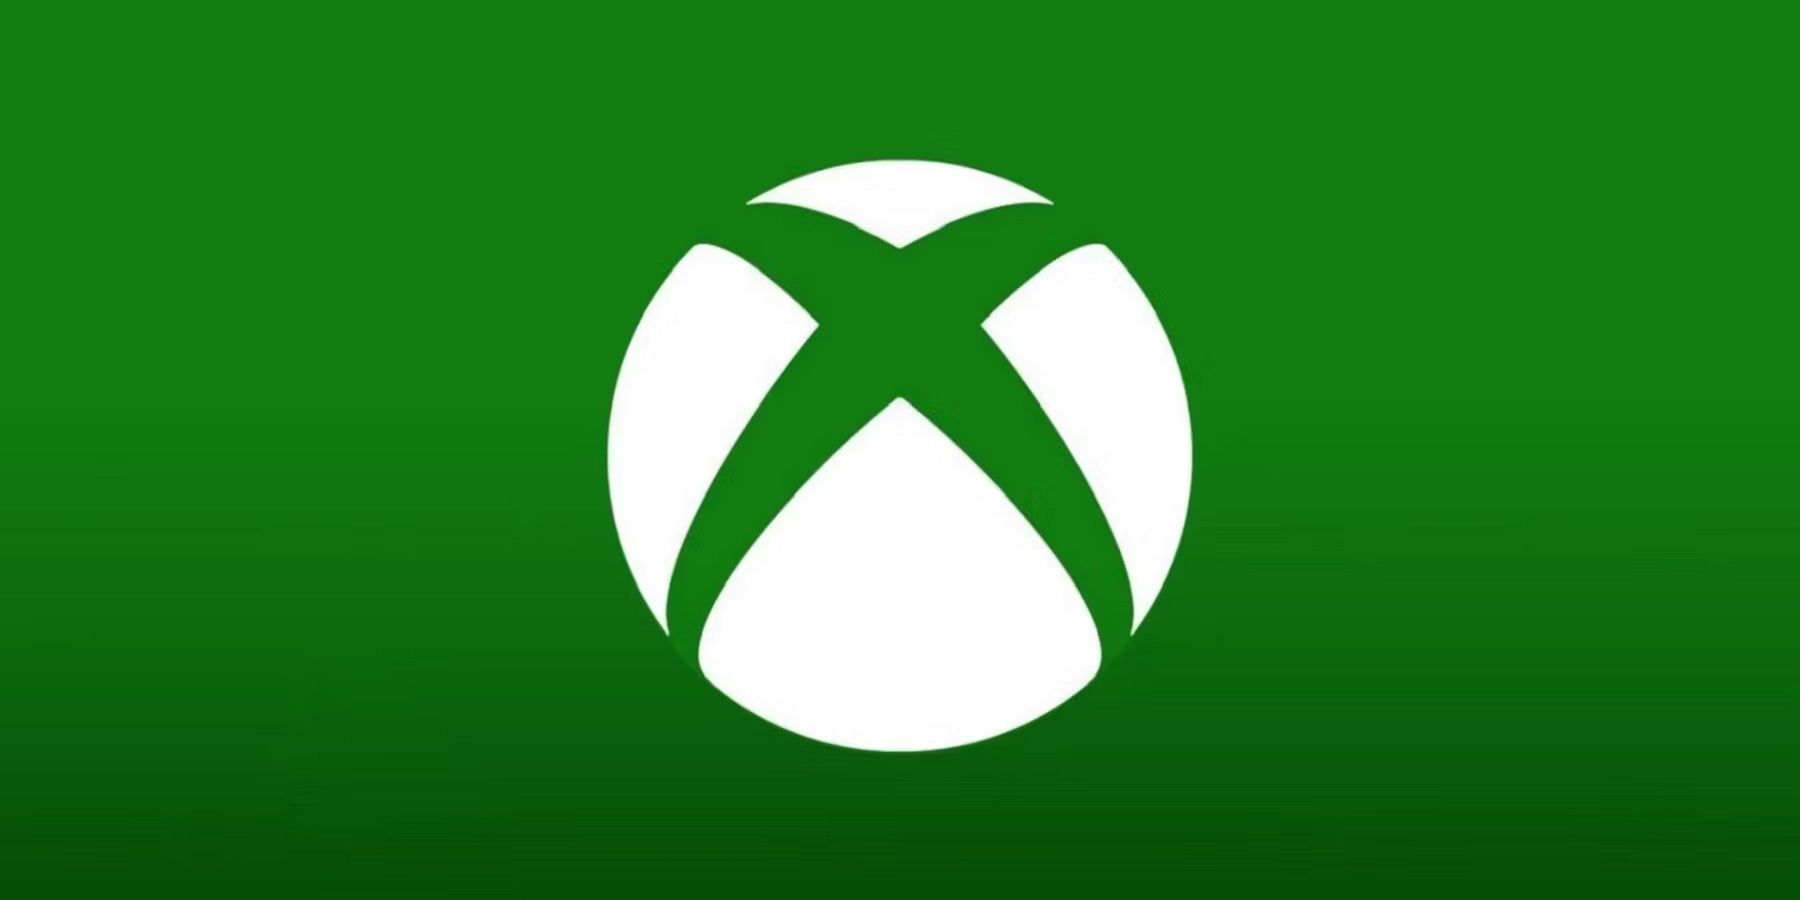 xbox logo green background